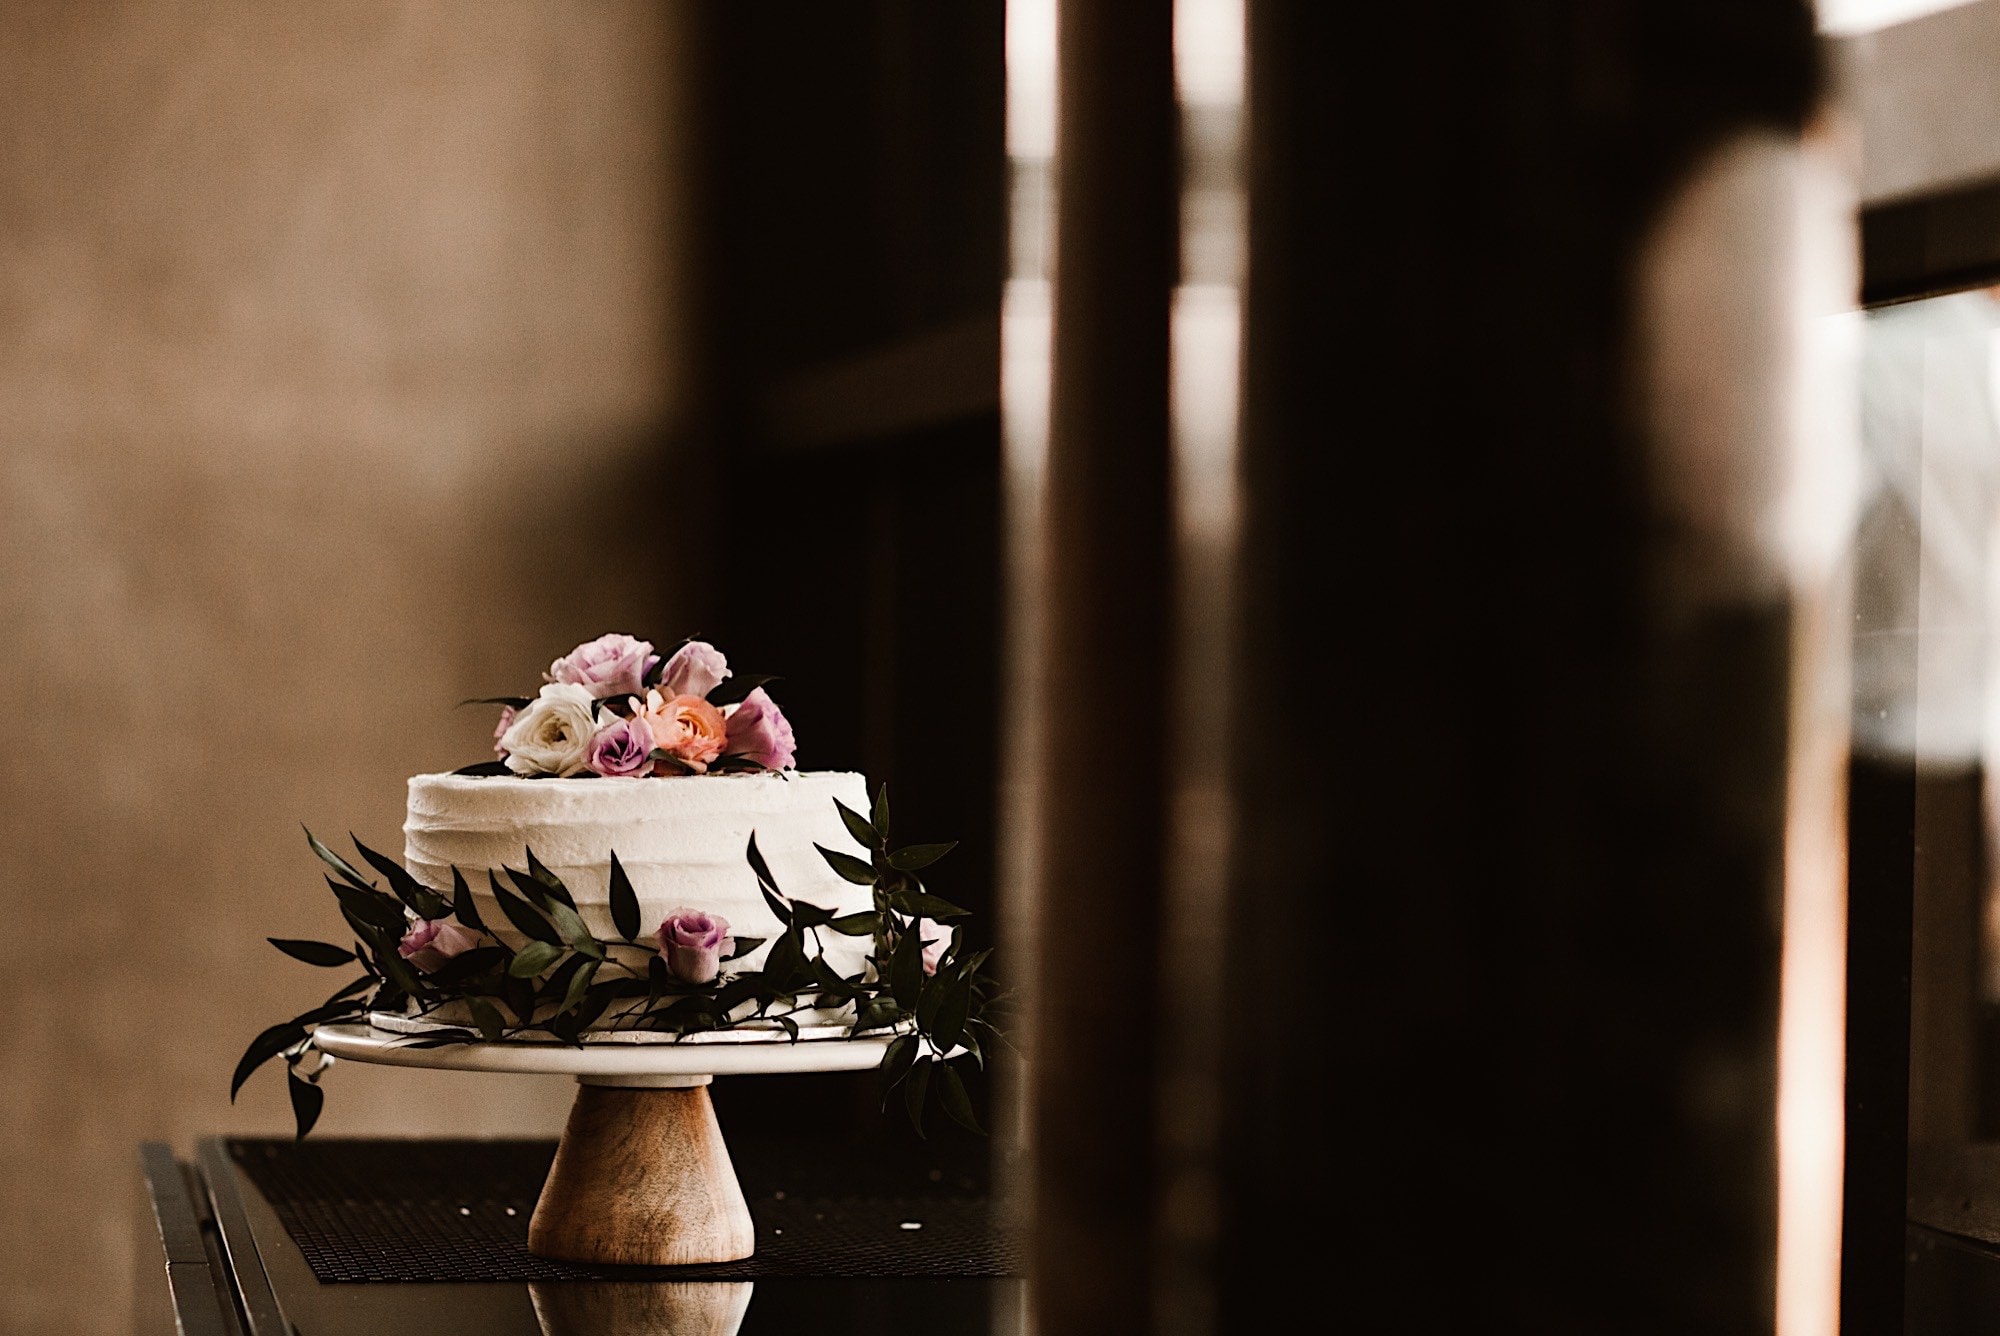 niagara wedding cake 